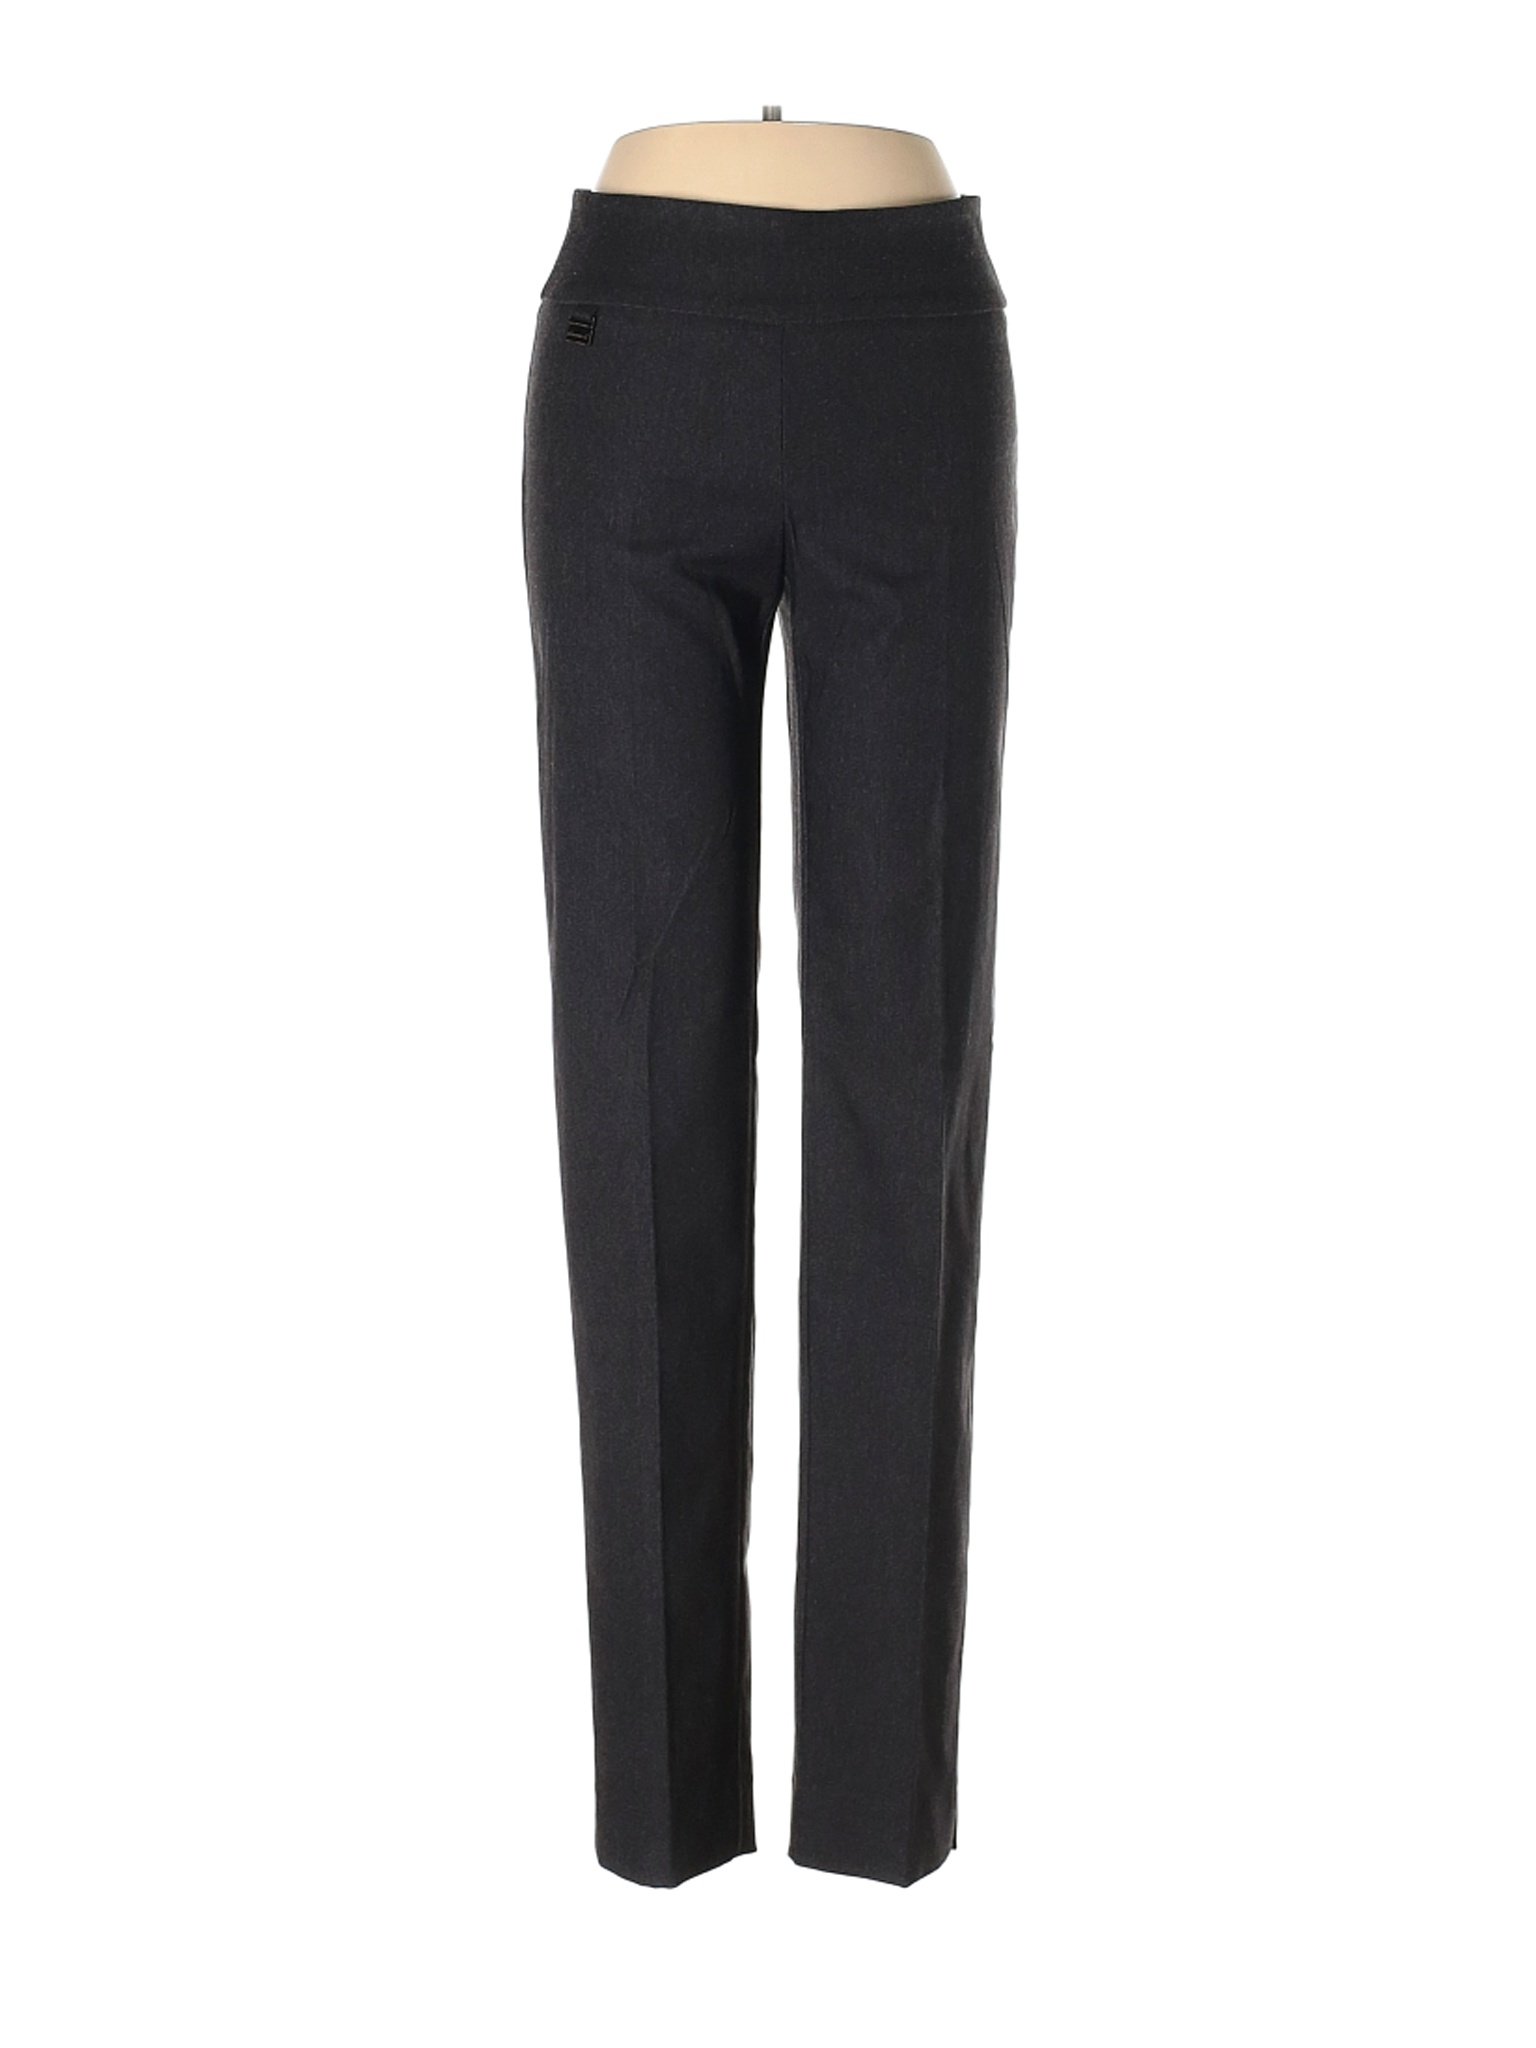 Lisette-L Women Black Casual Pants 2 | eBay